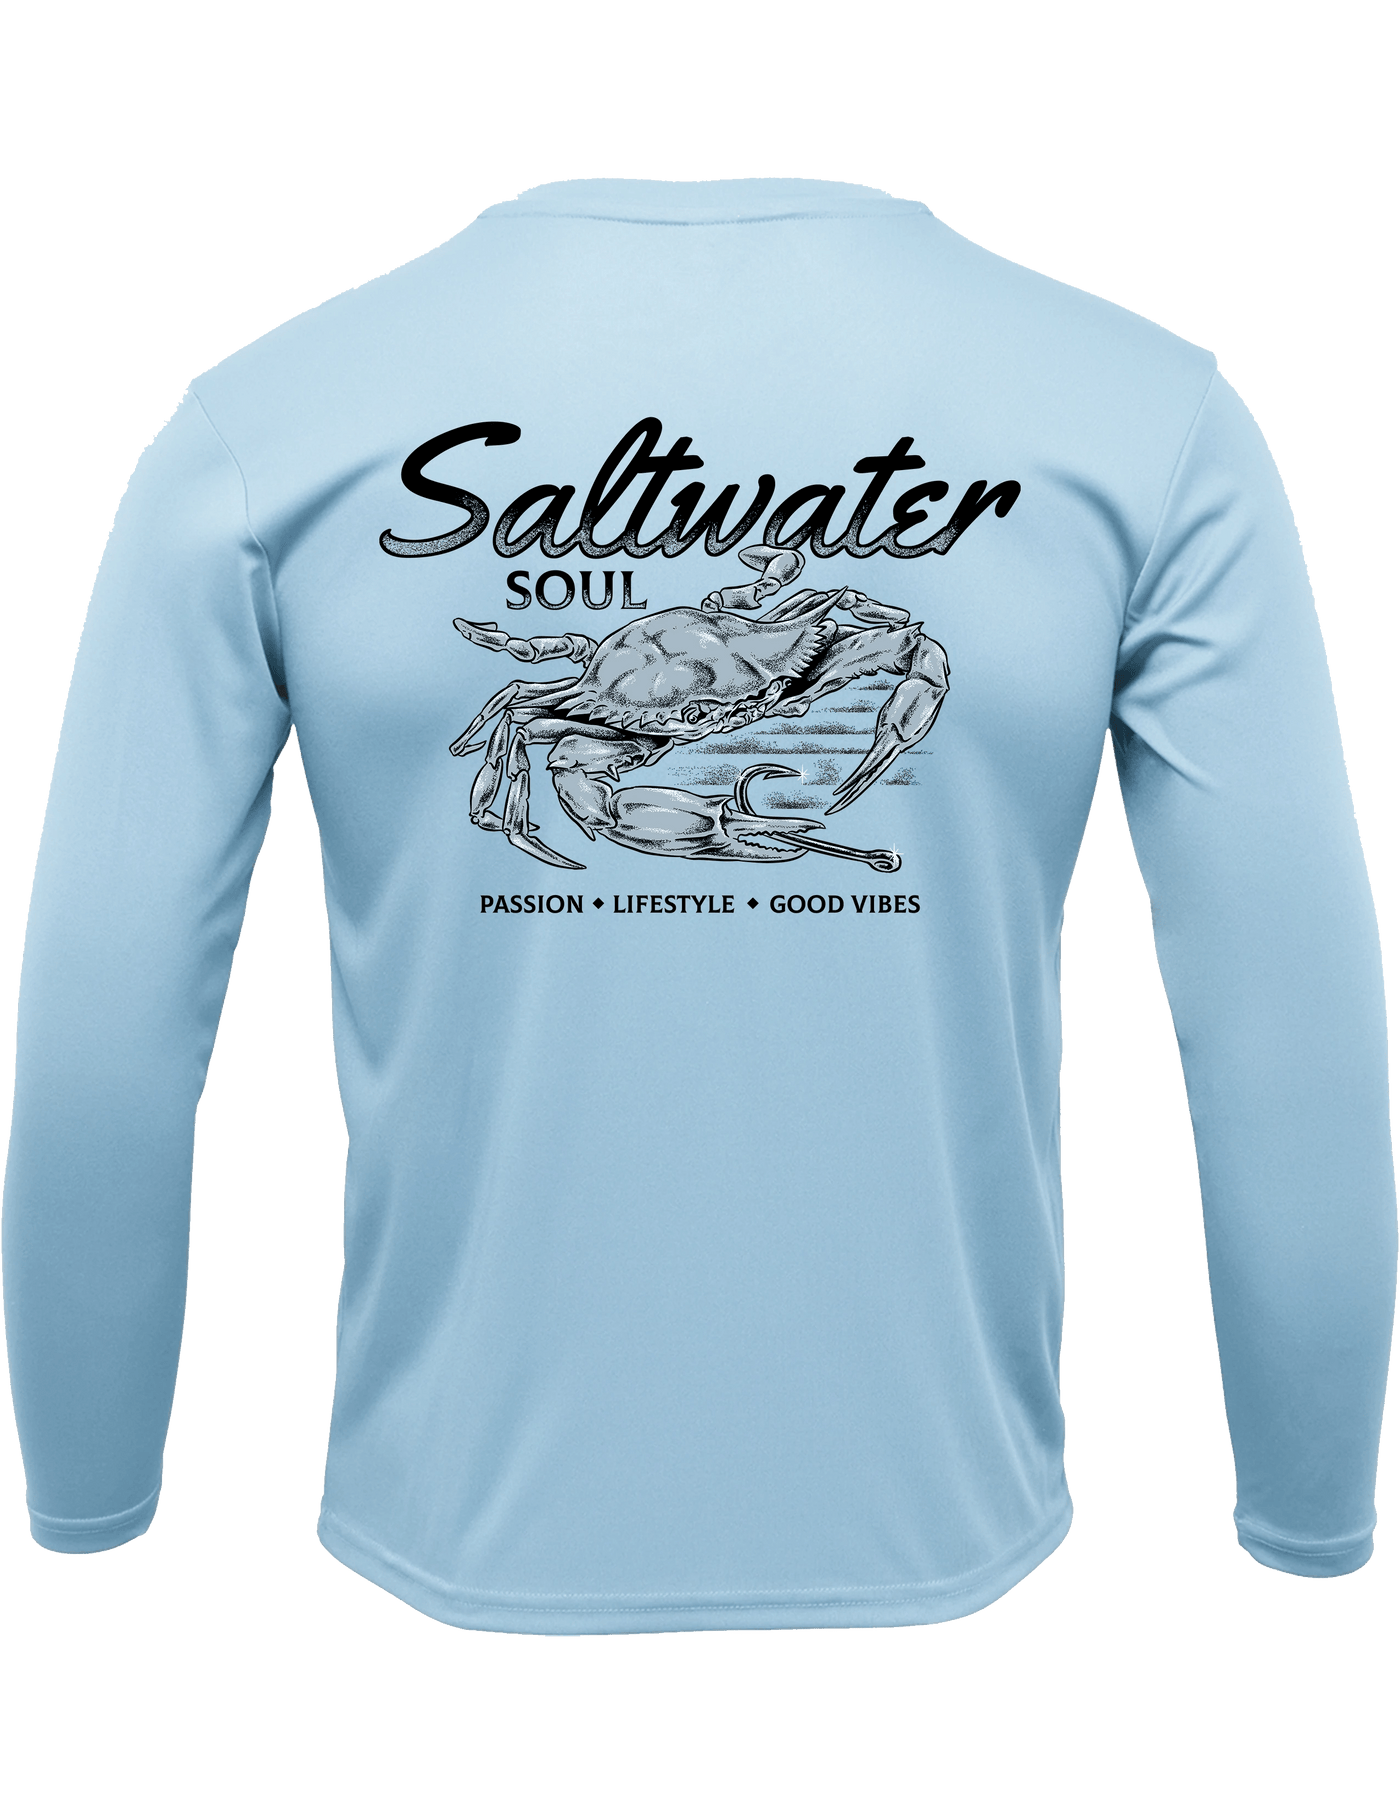 Saltwater Soul - Blue Crab - Men's Performance Long-Sleeve Shirt Apparel Saltwater Soul Small 